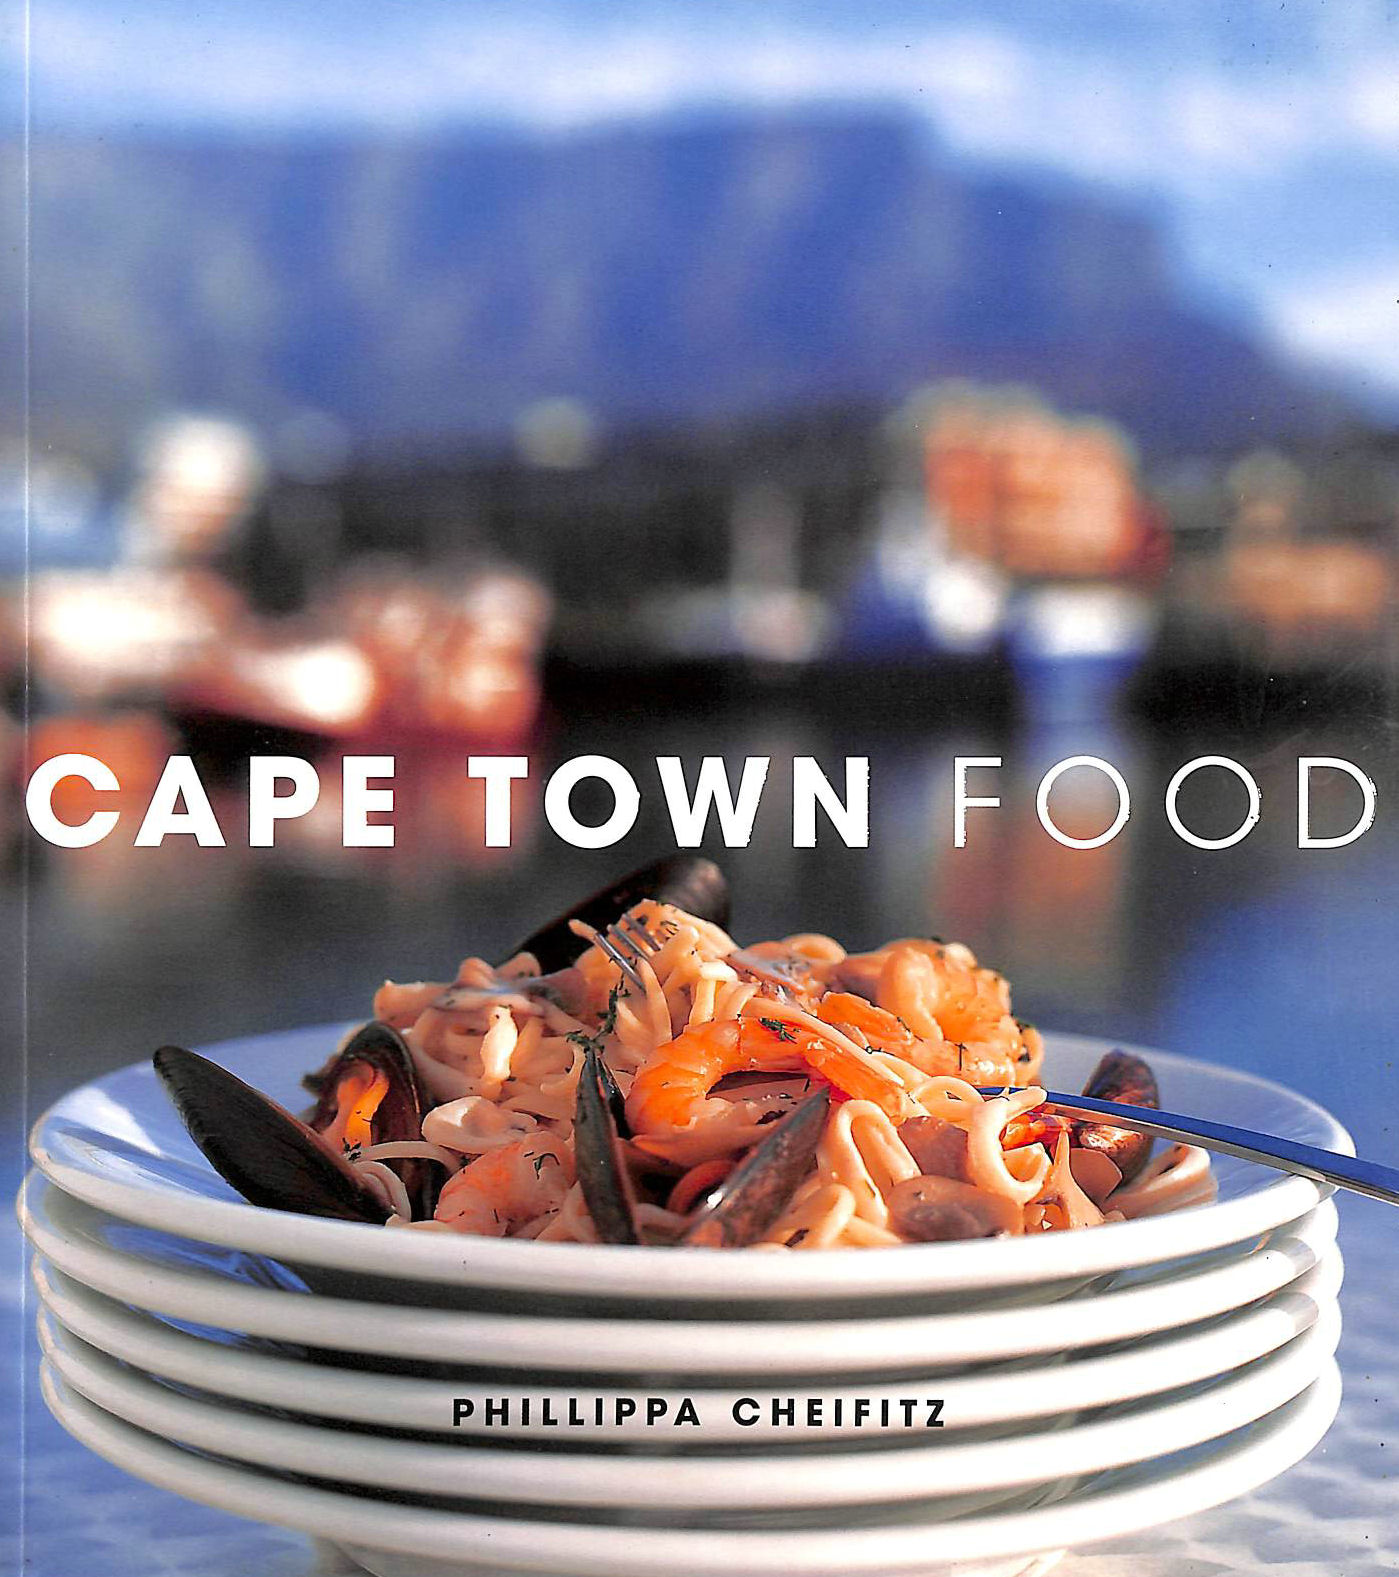 CHEIFITZ, PHILLIPPA - Cape Town Food